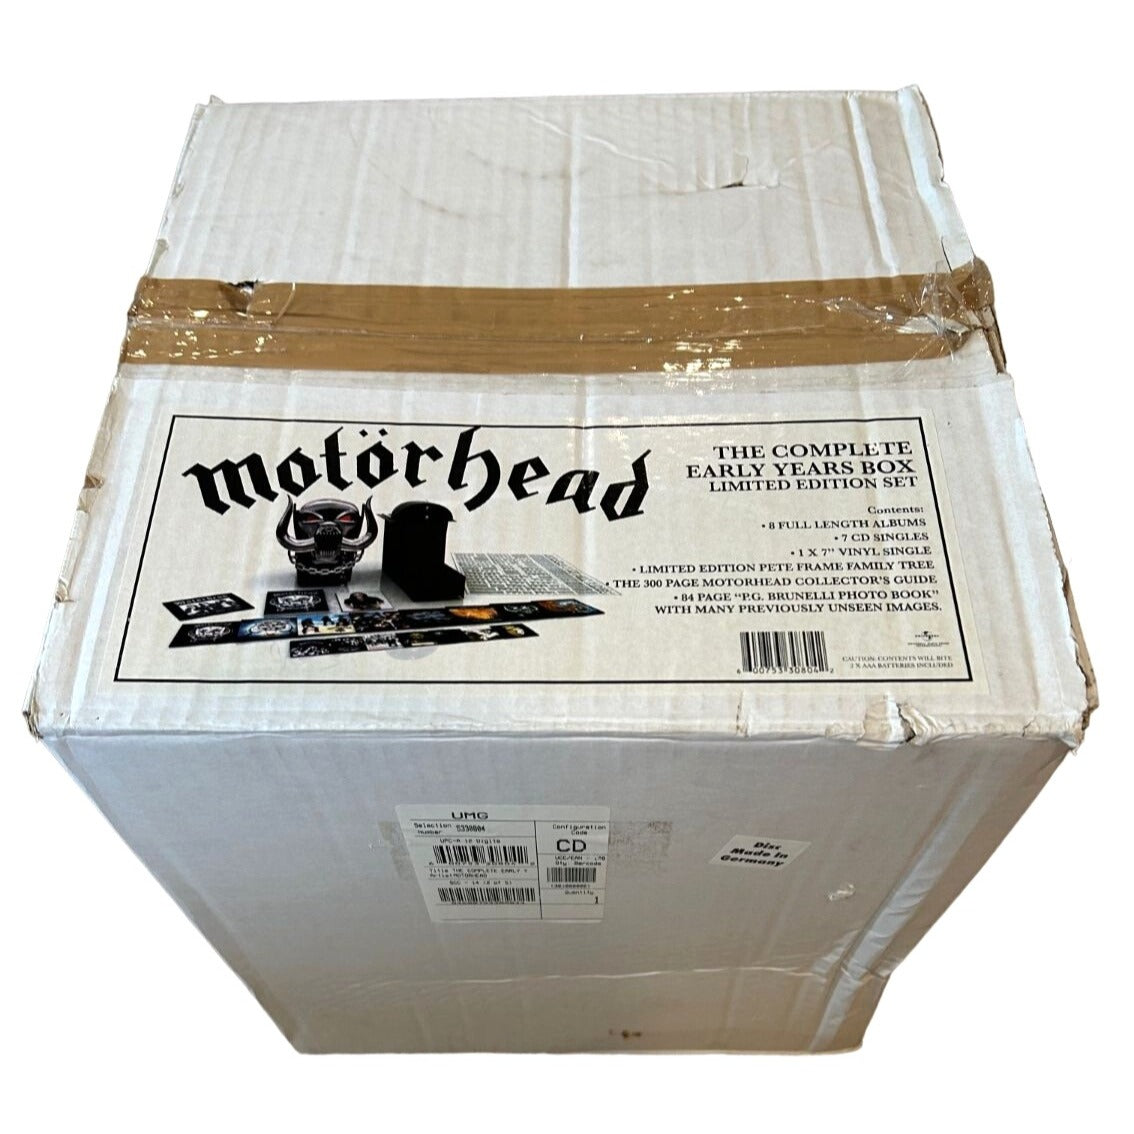 Motörhead - Complete Early Years Ltd. Ed. 35th Anniversary Box Set - New in Box